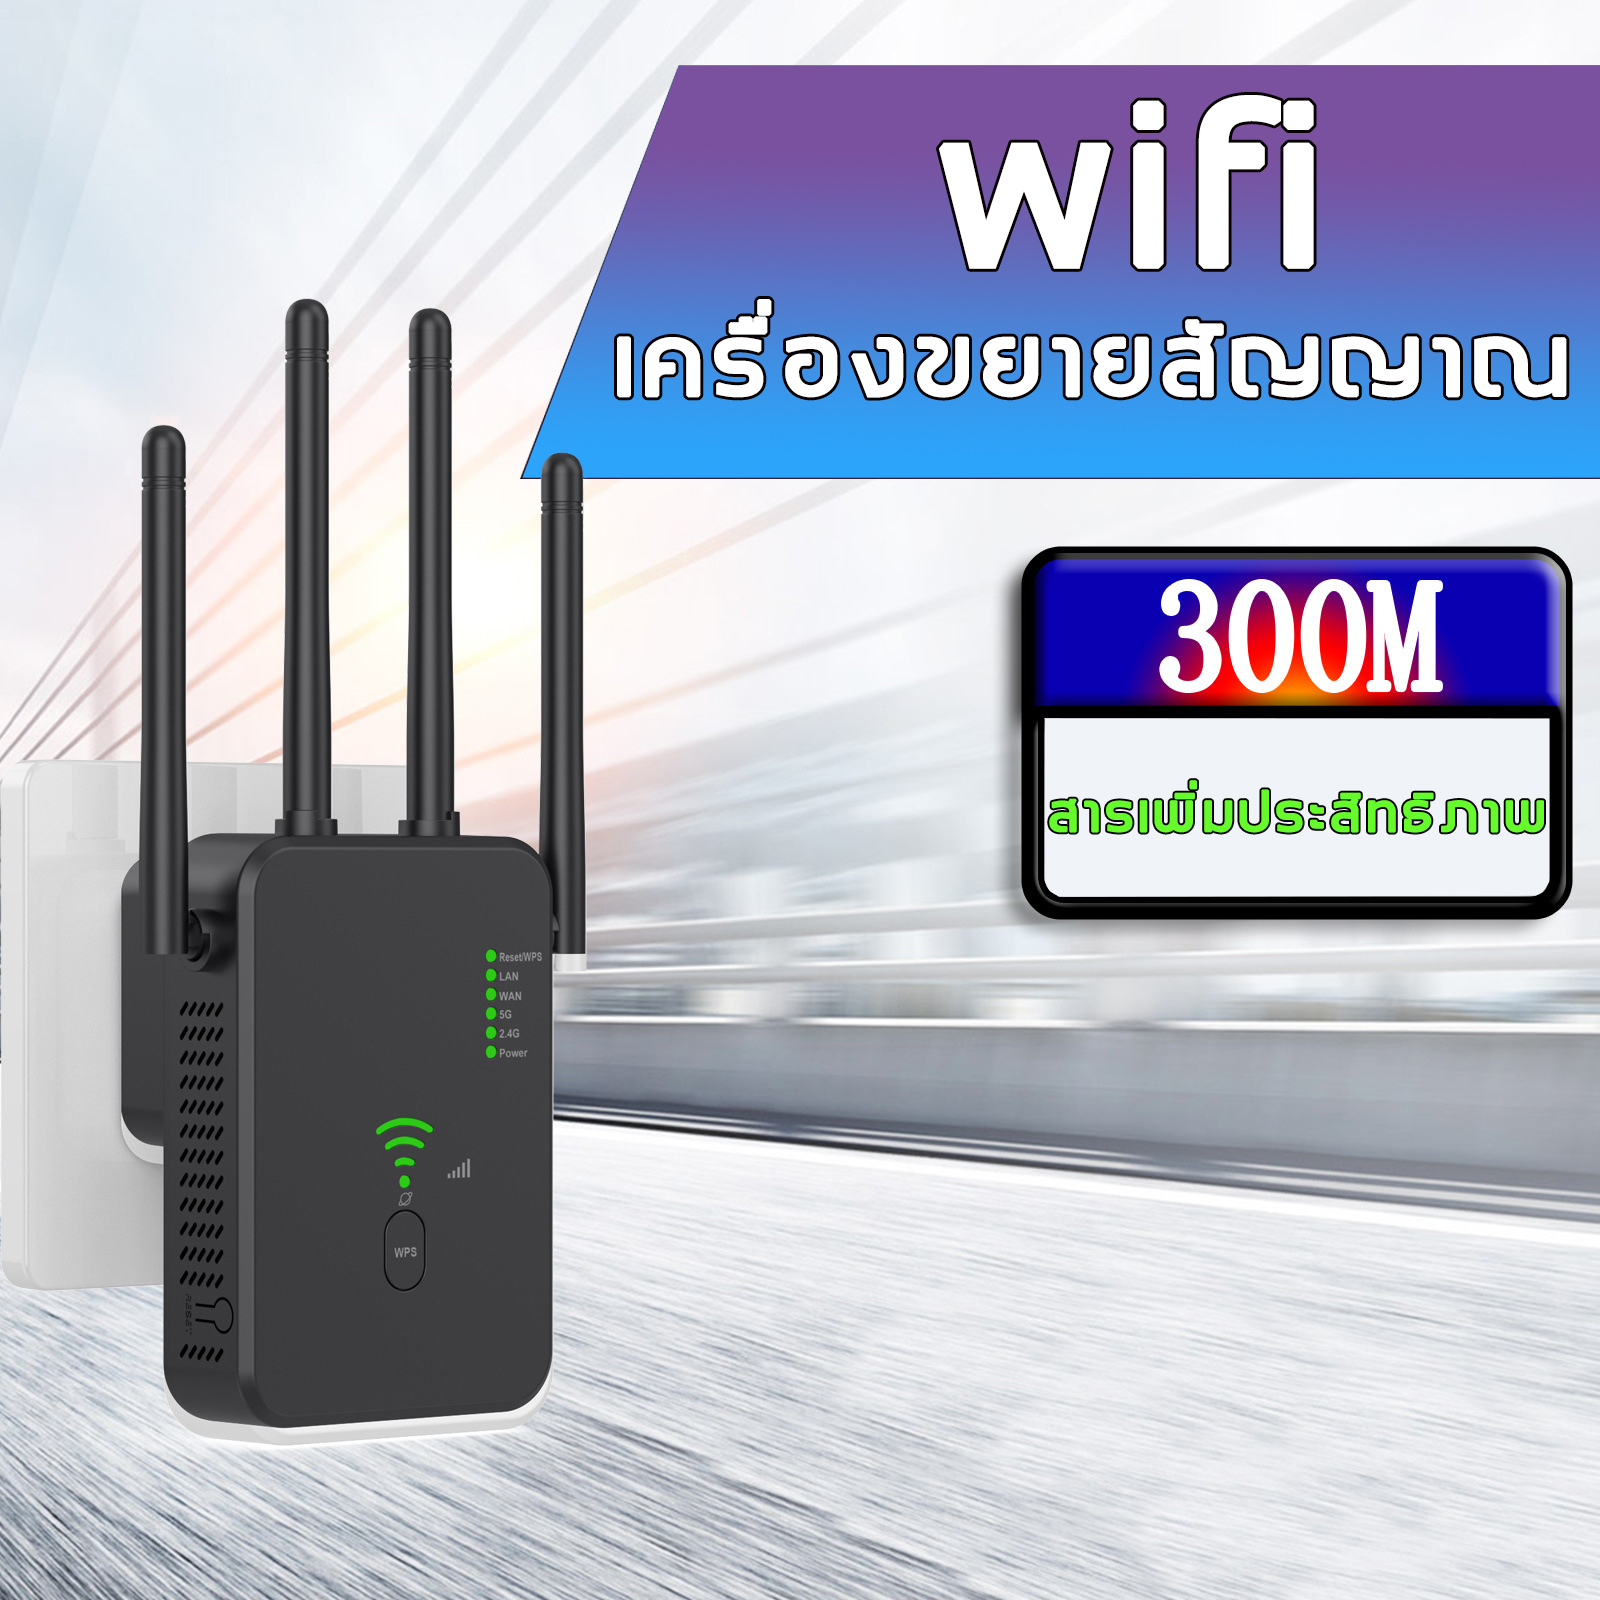 Netcore เน็ตเร็วขึ้น 10 เท่า ตัวขยายสัญญาณ Wifi 4 เสาอากาศ  เร็วขึ้นครอบคลุมทั้งบ้านAc ความถี่คู่2.4Ghz 5Ghz Wi-Fi Amplifier(เครื่องขยาย สัญญาณWifiขยายสัญญาณไวไฟตัวขยายสัญญาณไวไฟ Wifiwi-Fi Range Extenderwifi  Repeaterอุปกรณ์ขยายสัญญาณ) - Yongbufeng - Thaipick